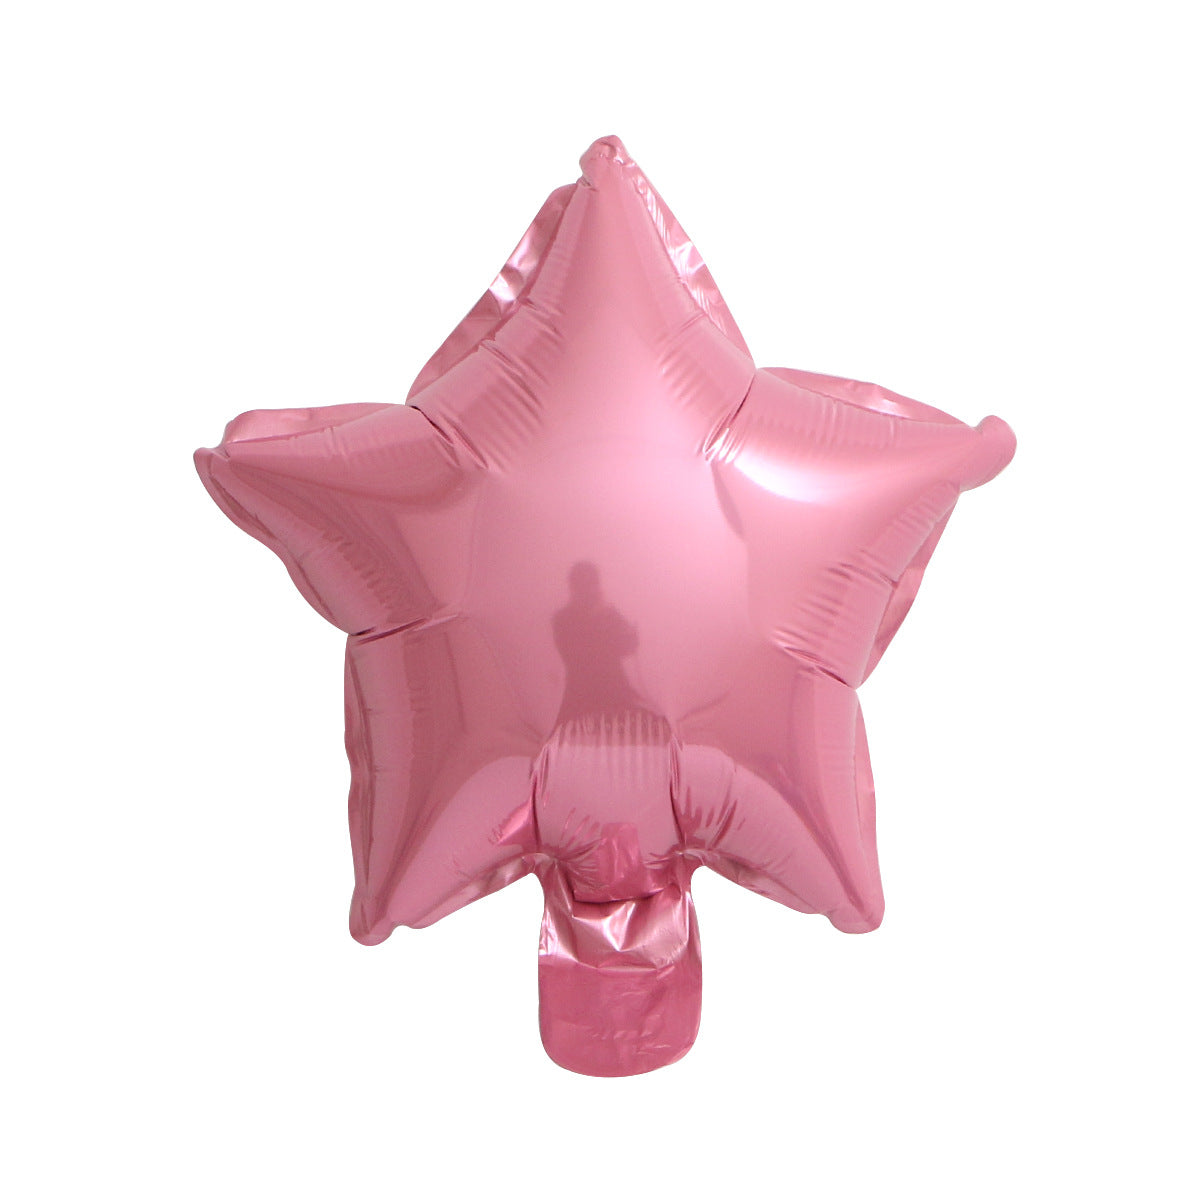 10" Pink Star - 24cm DECORATIVE SHAPES soleystudio 490